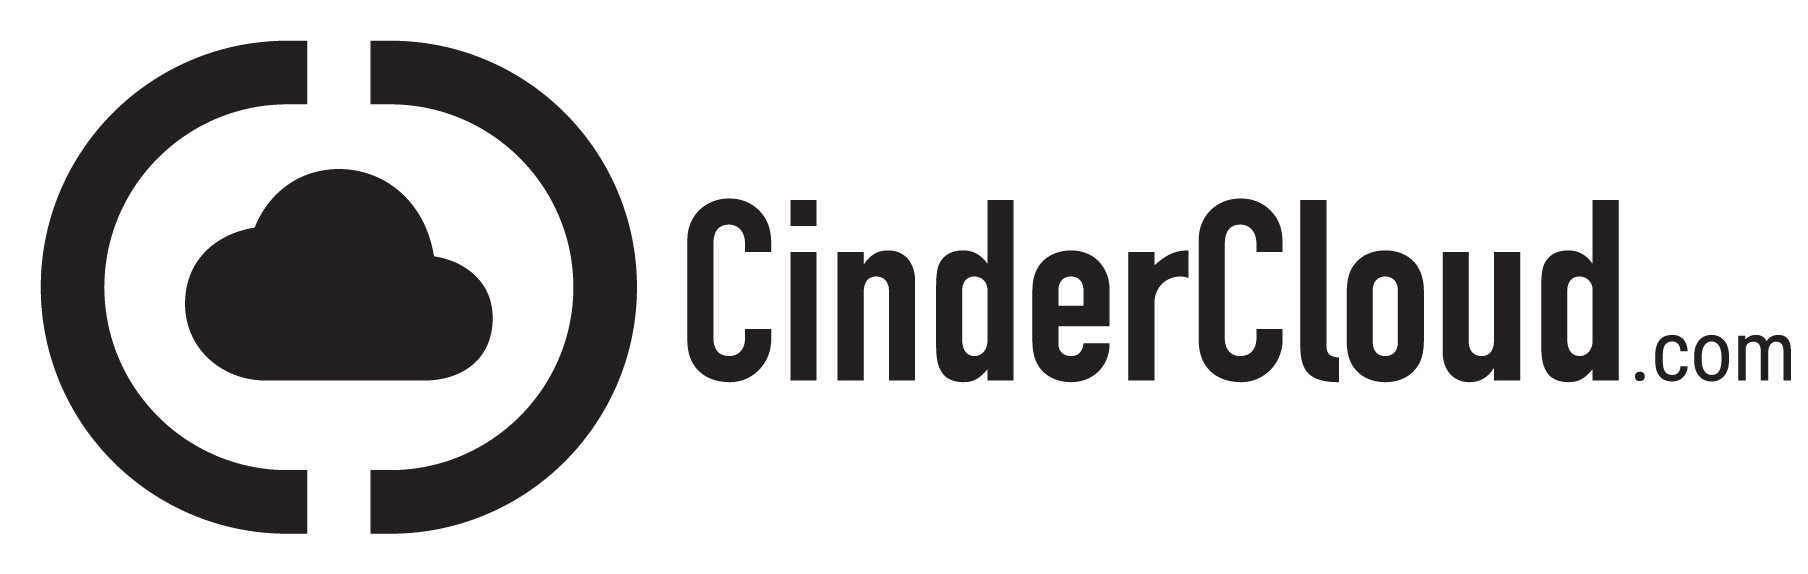 CinderCloud.com